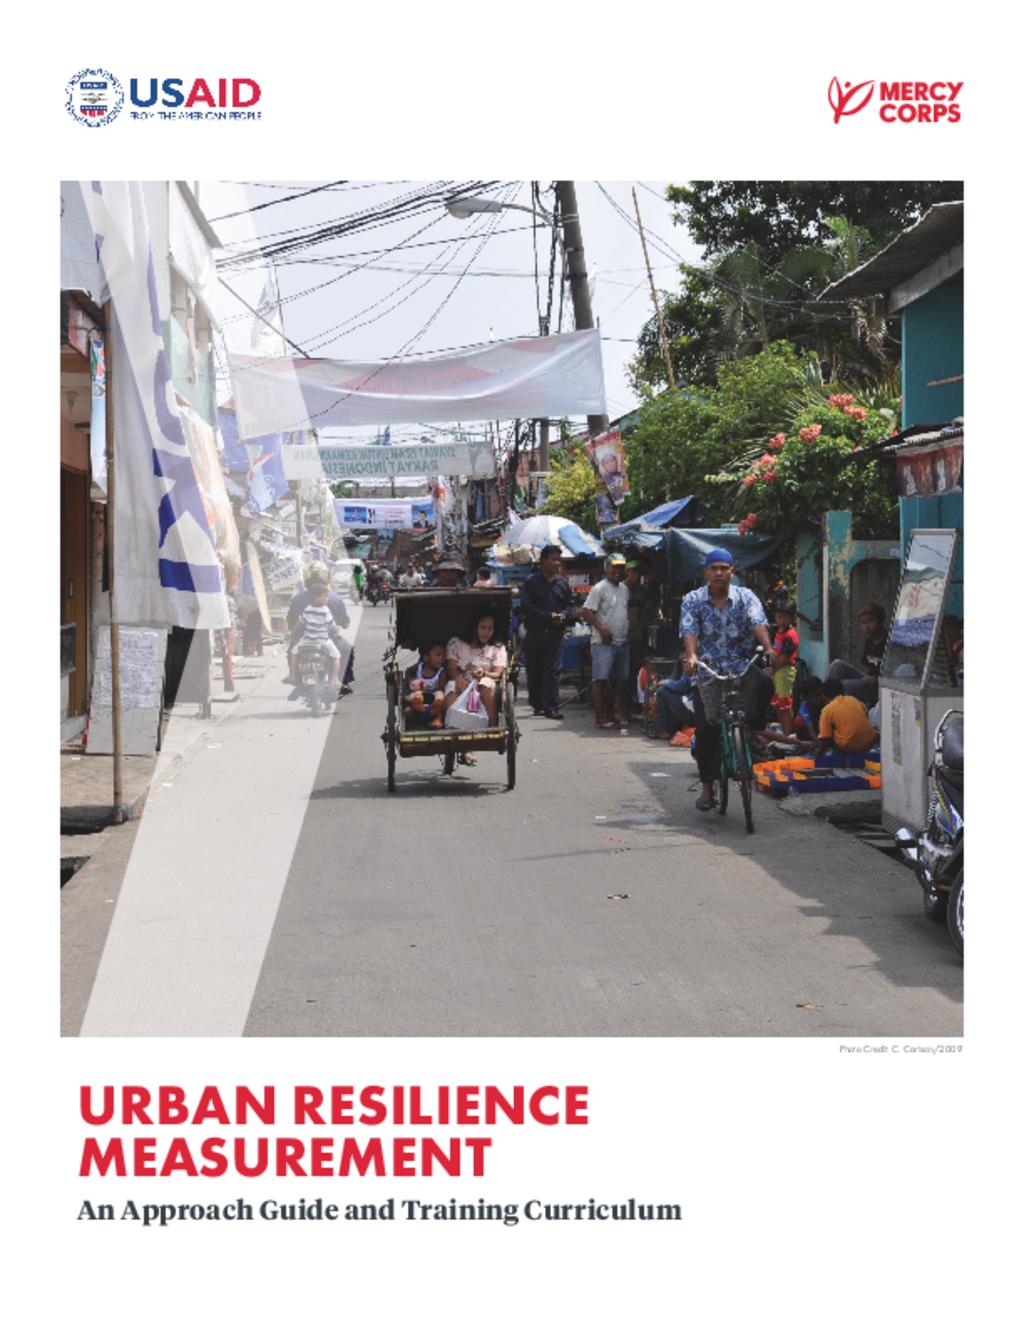 Urban Resilience curriculum